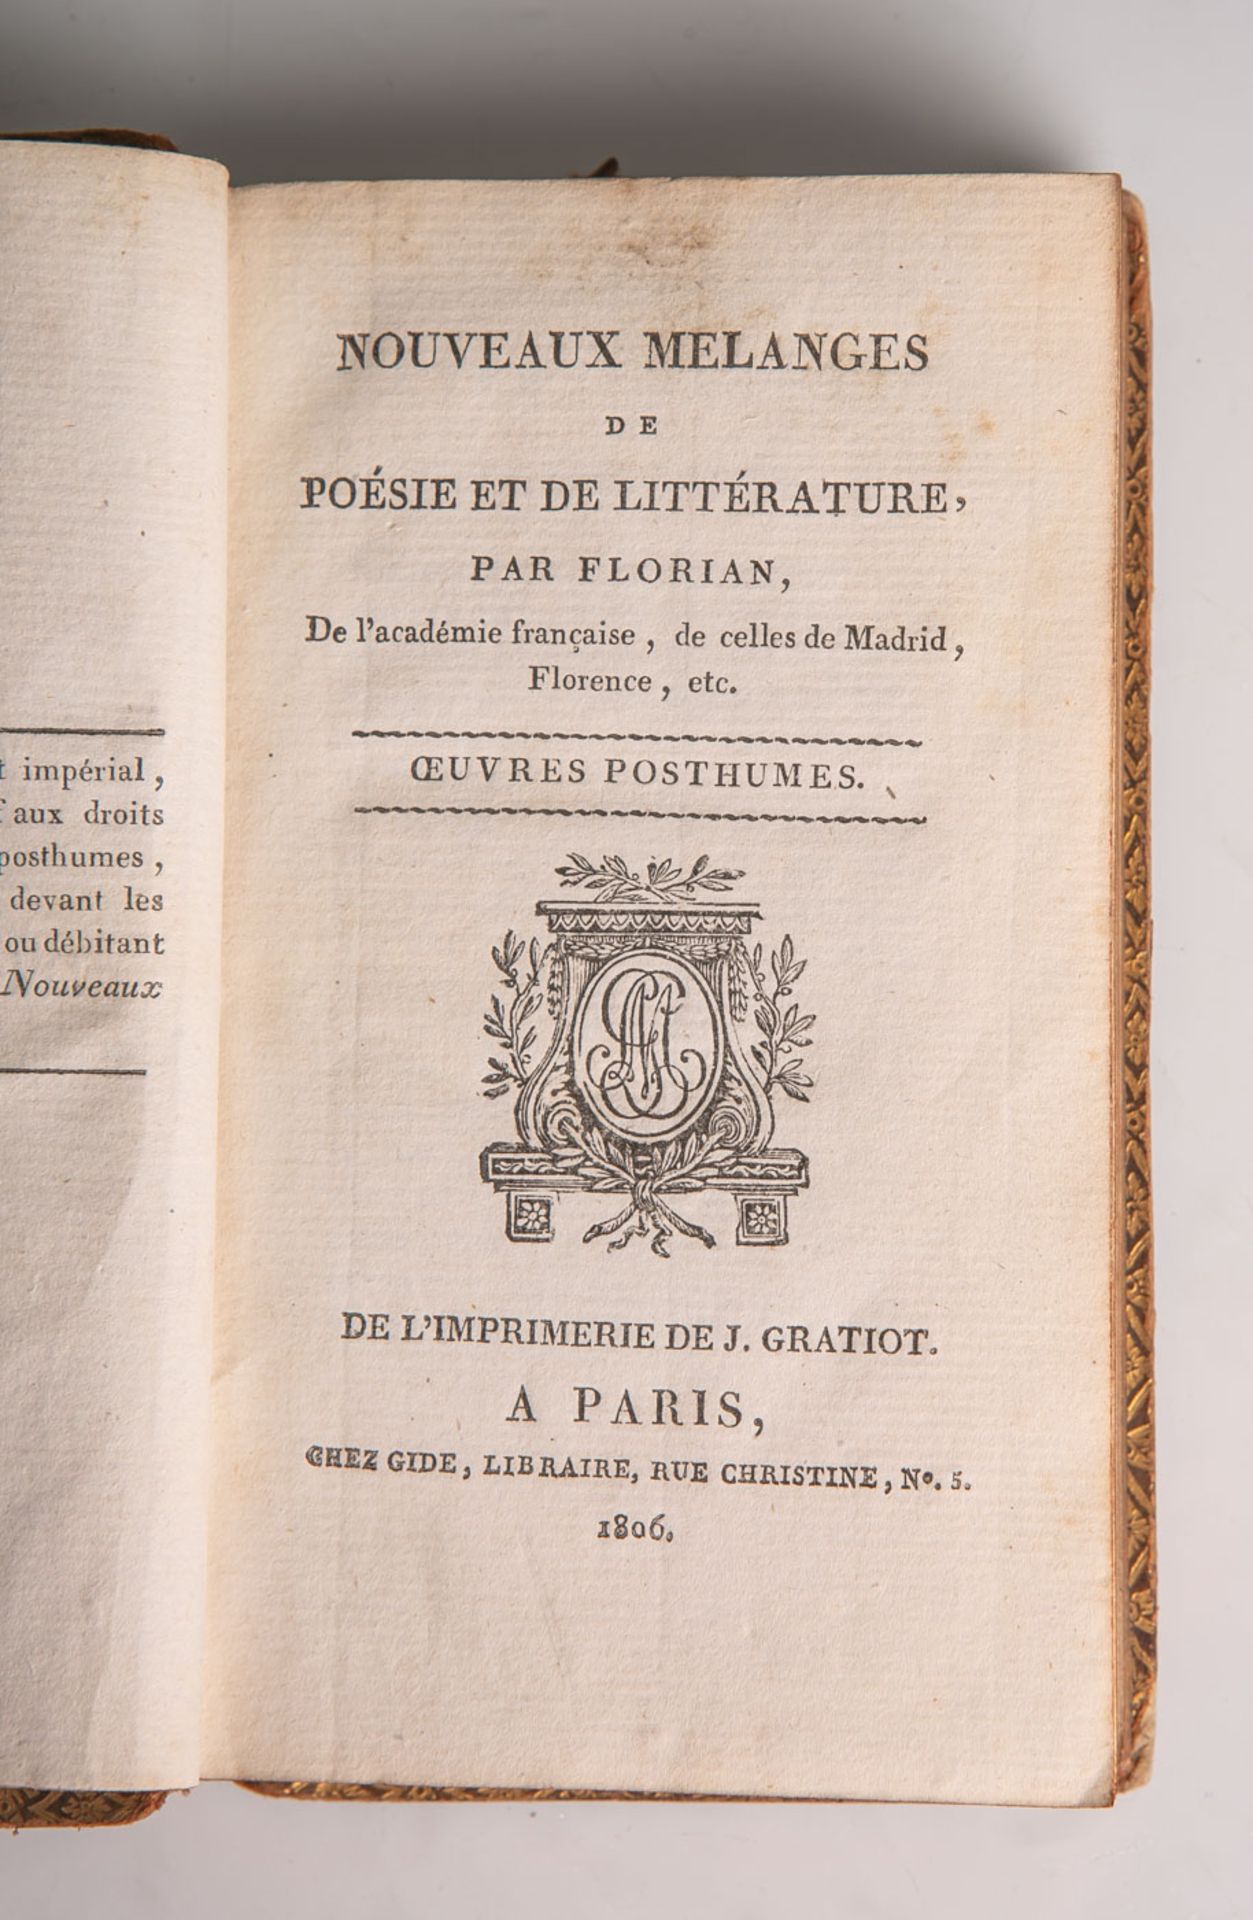 "Oeuvres Posthumes de Florian", Neue Poesiemischungen u. Literatur durch M. de Florian,Ausgabe in